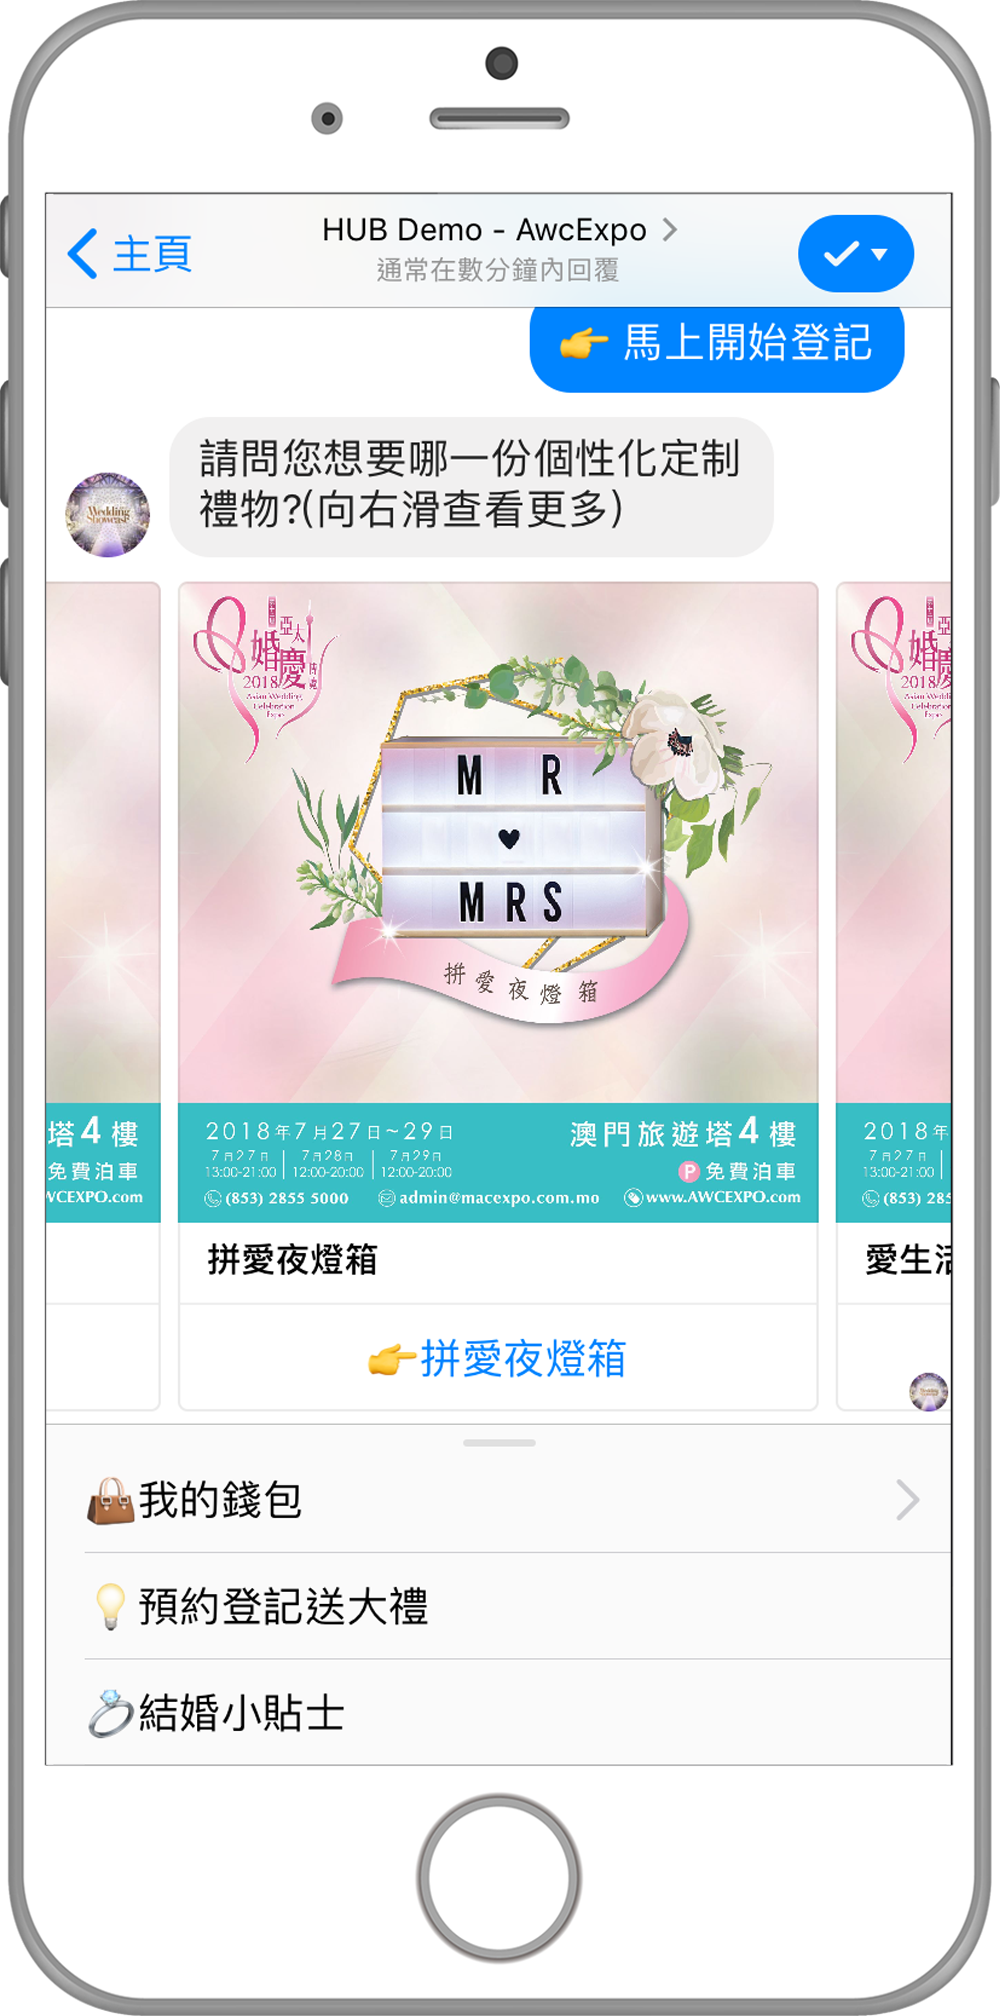 SignHUB - Asian Wedding Expo Chatbot